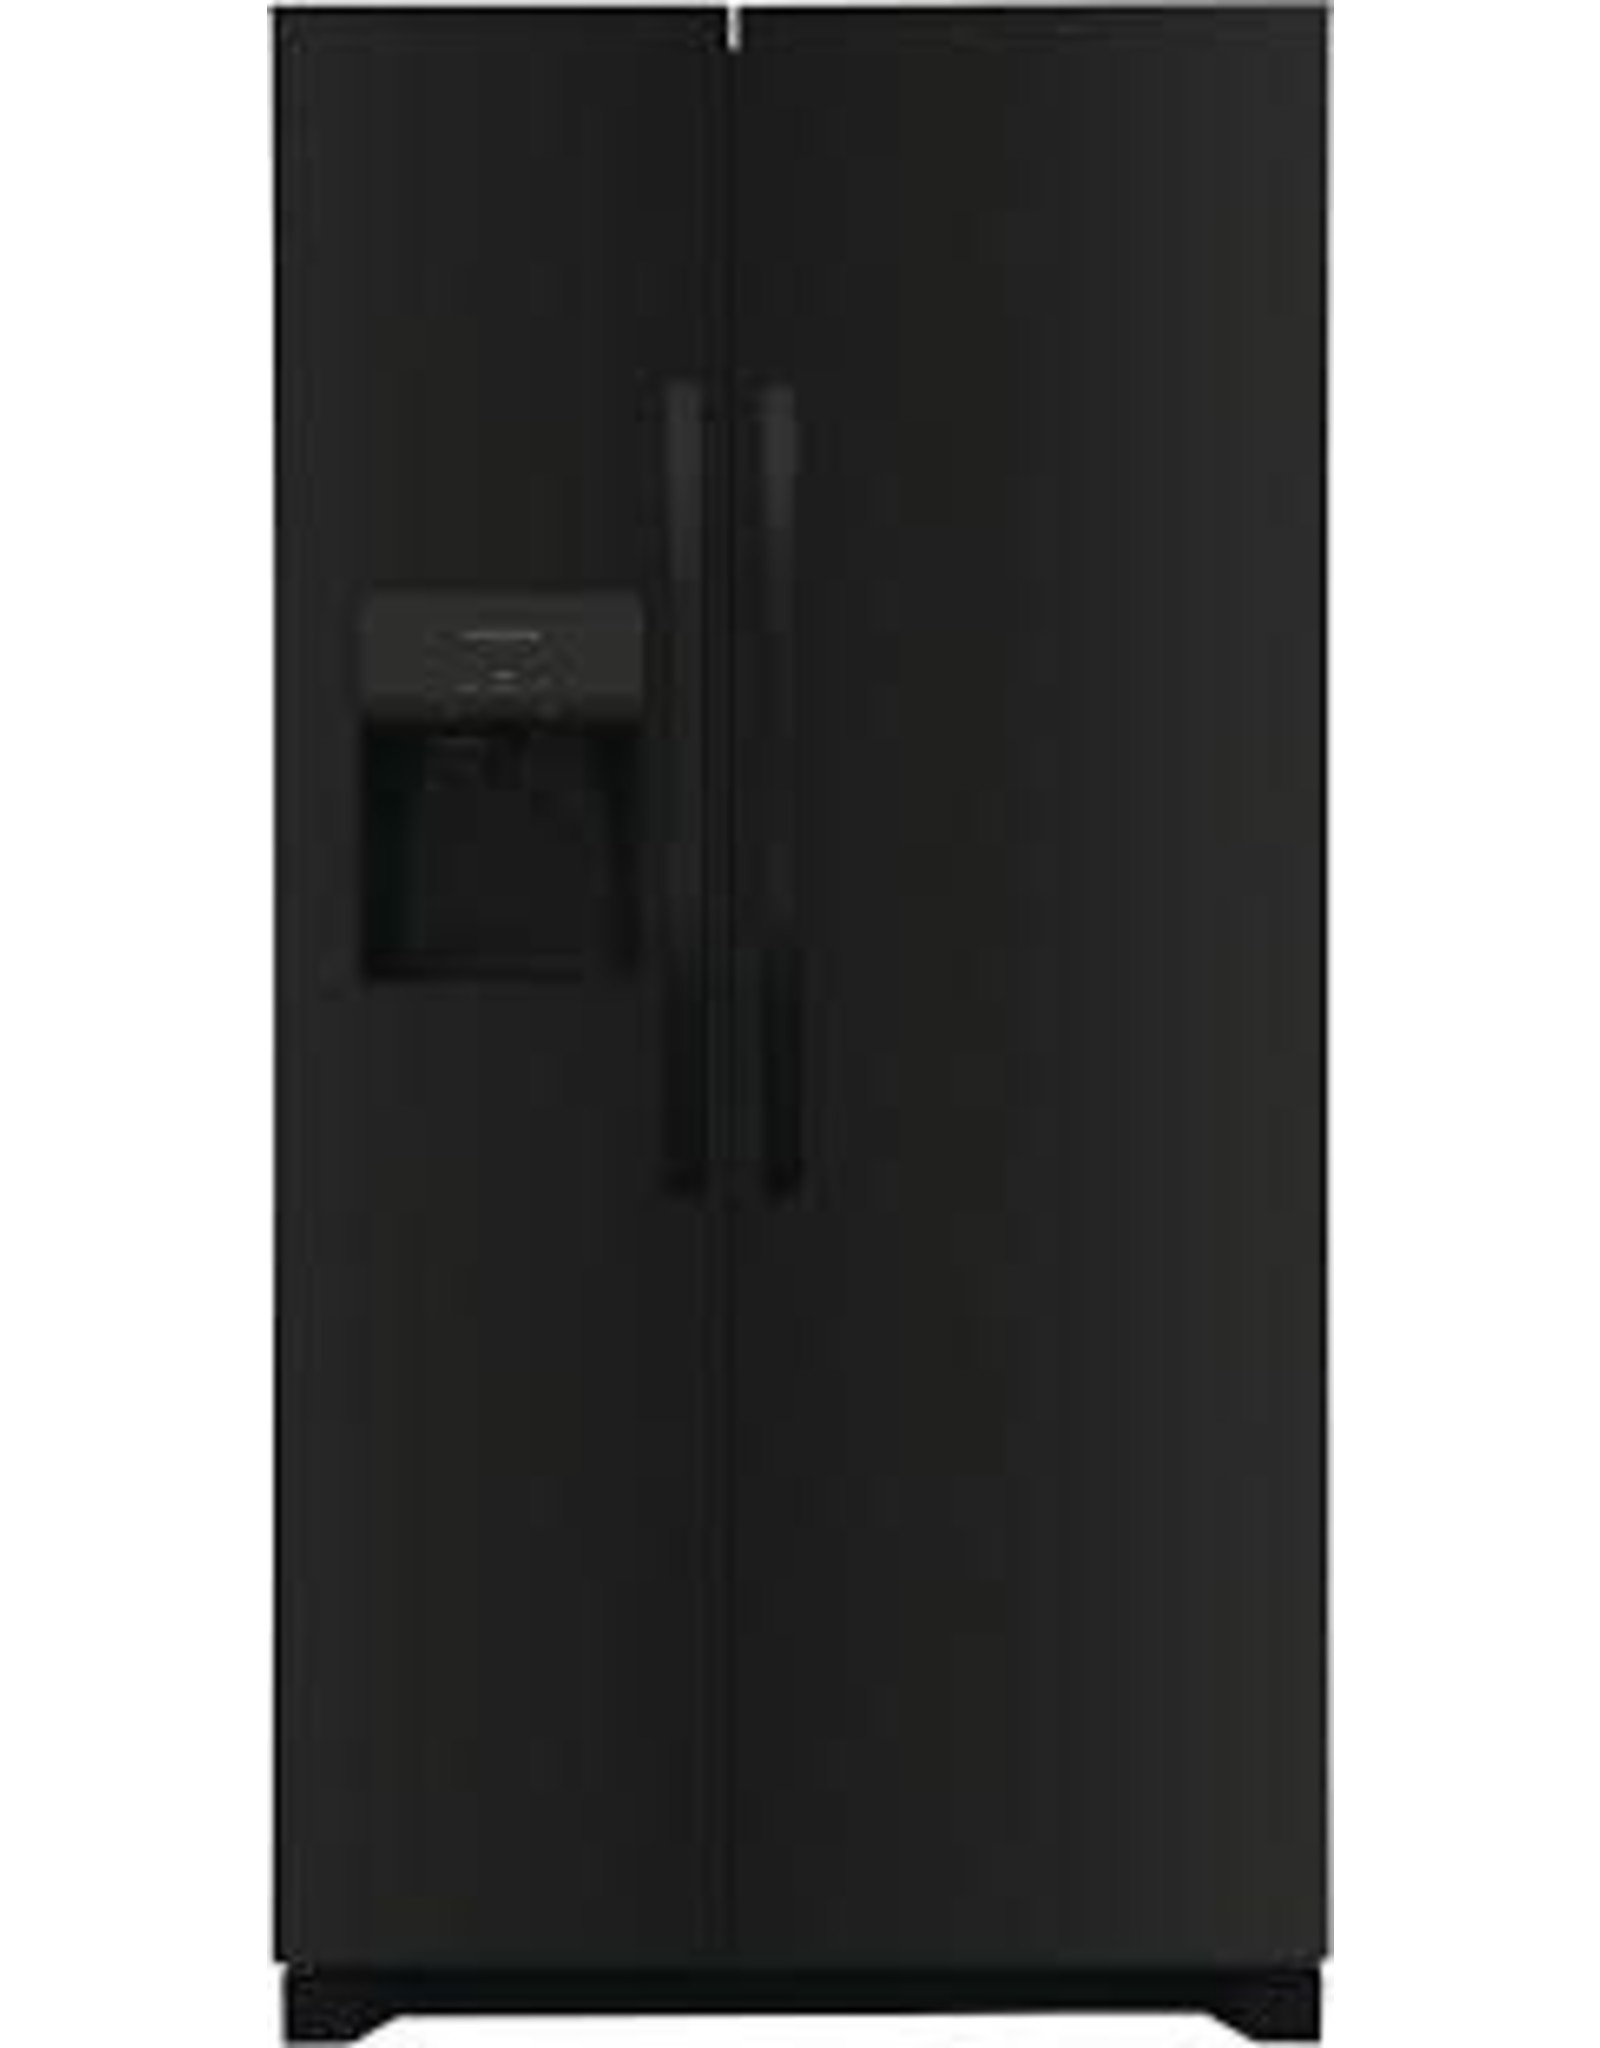 FRSS2623AB 36 in. 25.6 cu. ft. Side by Side Refrigerator in Black, Standard Depth